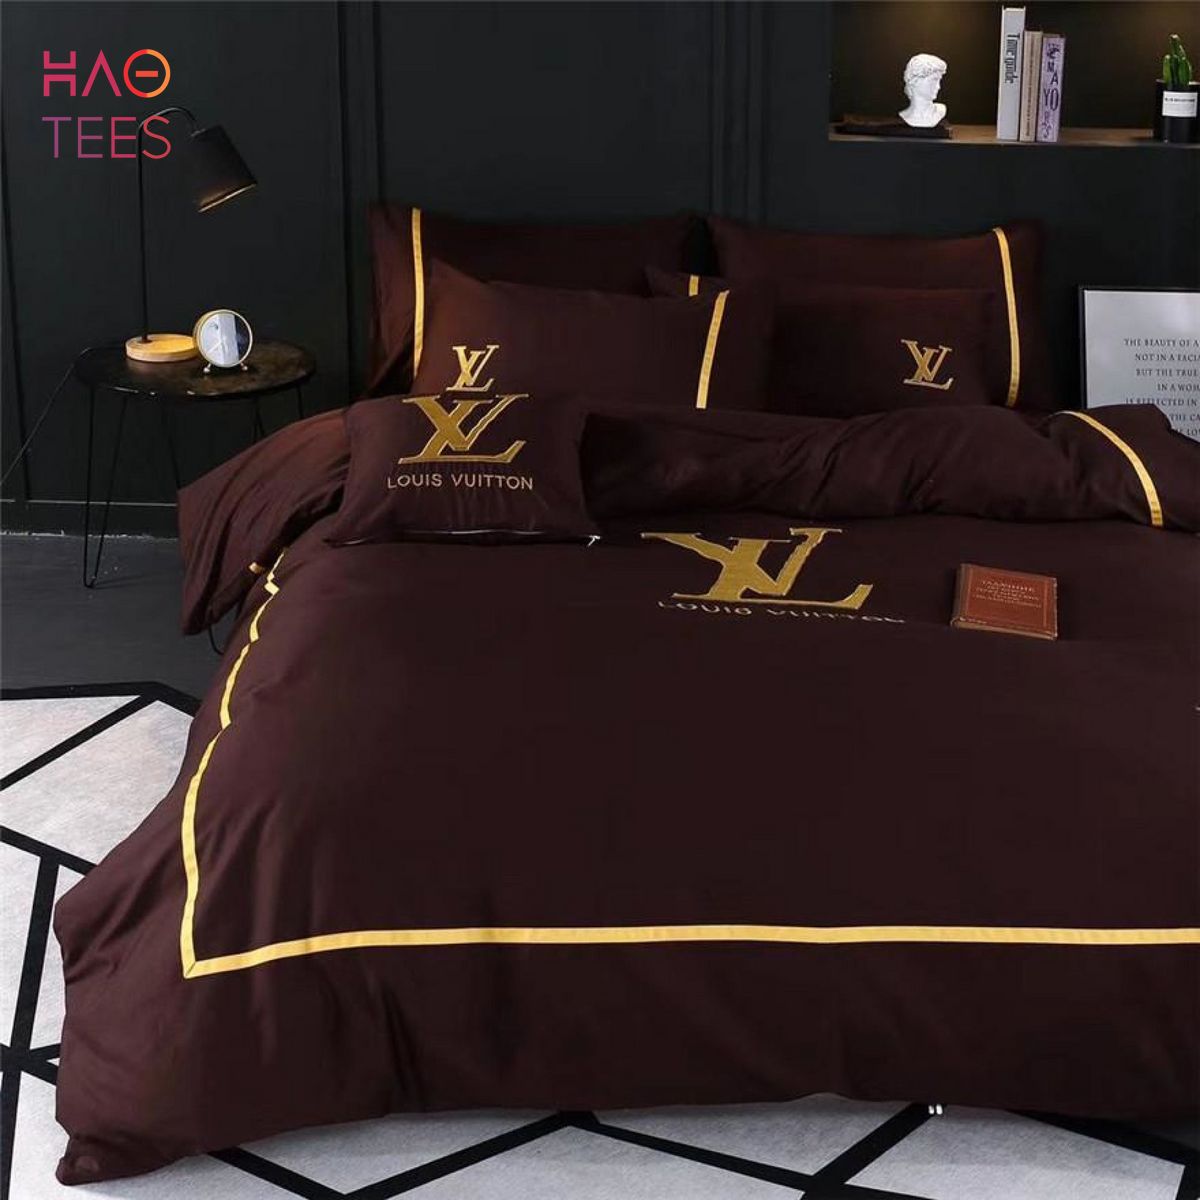 Lv type 170 bedding sets duvet cover lv bedroom sets luxury brand